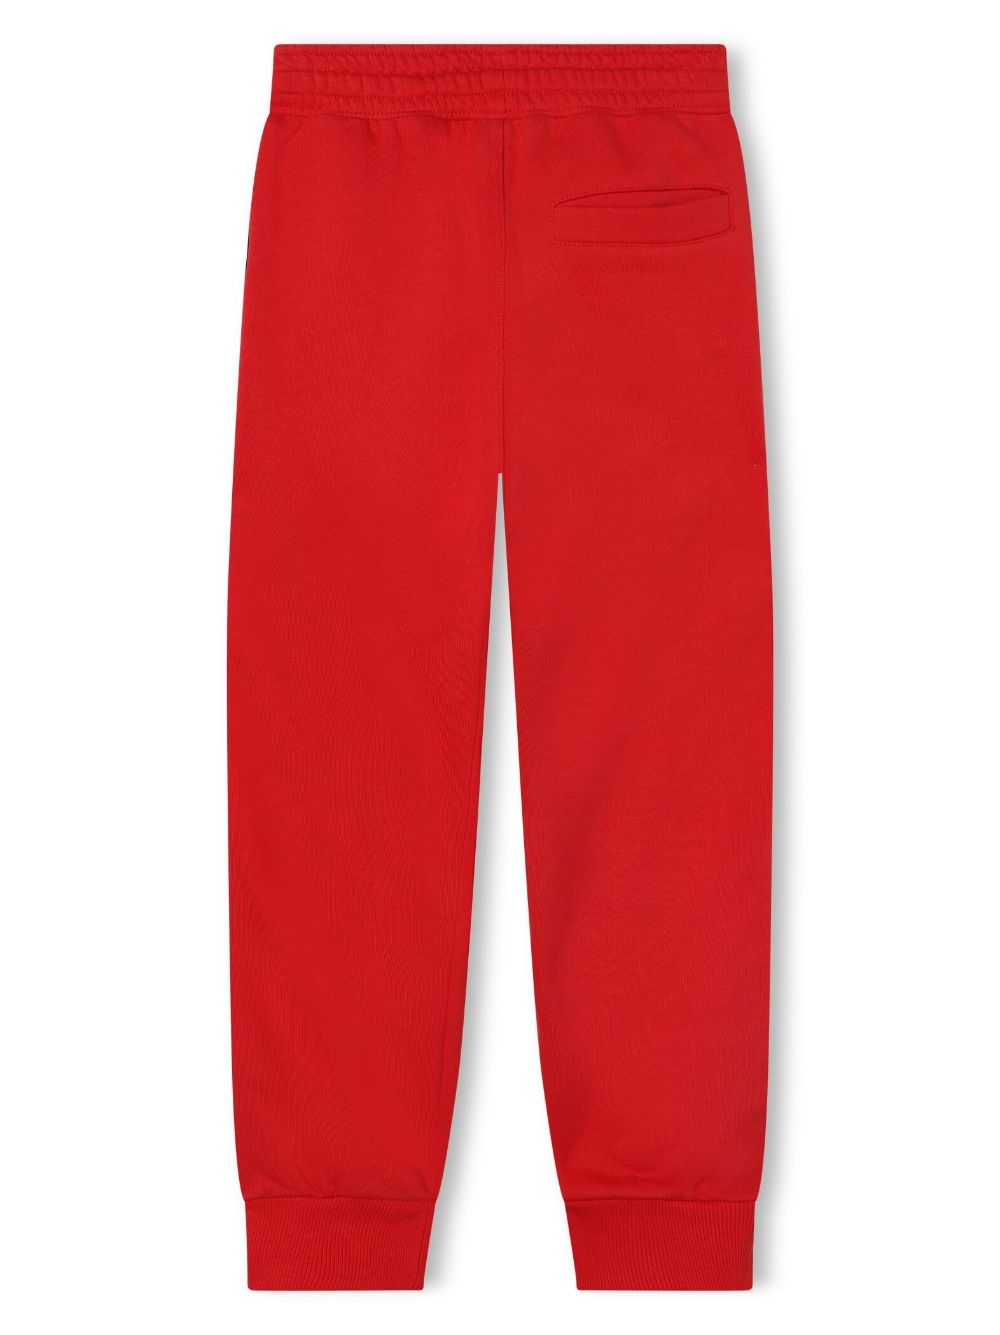 Pantalone rosso  bambino